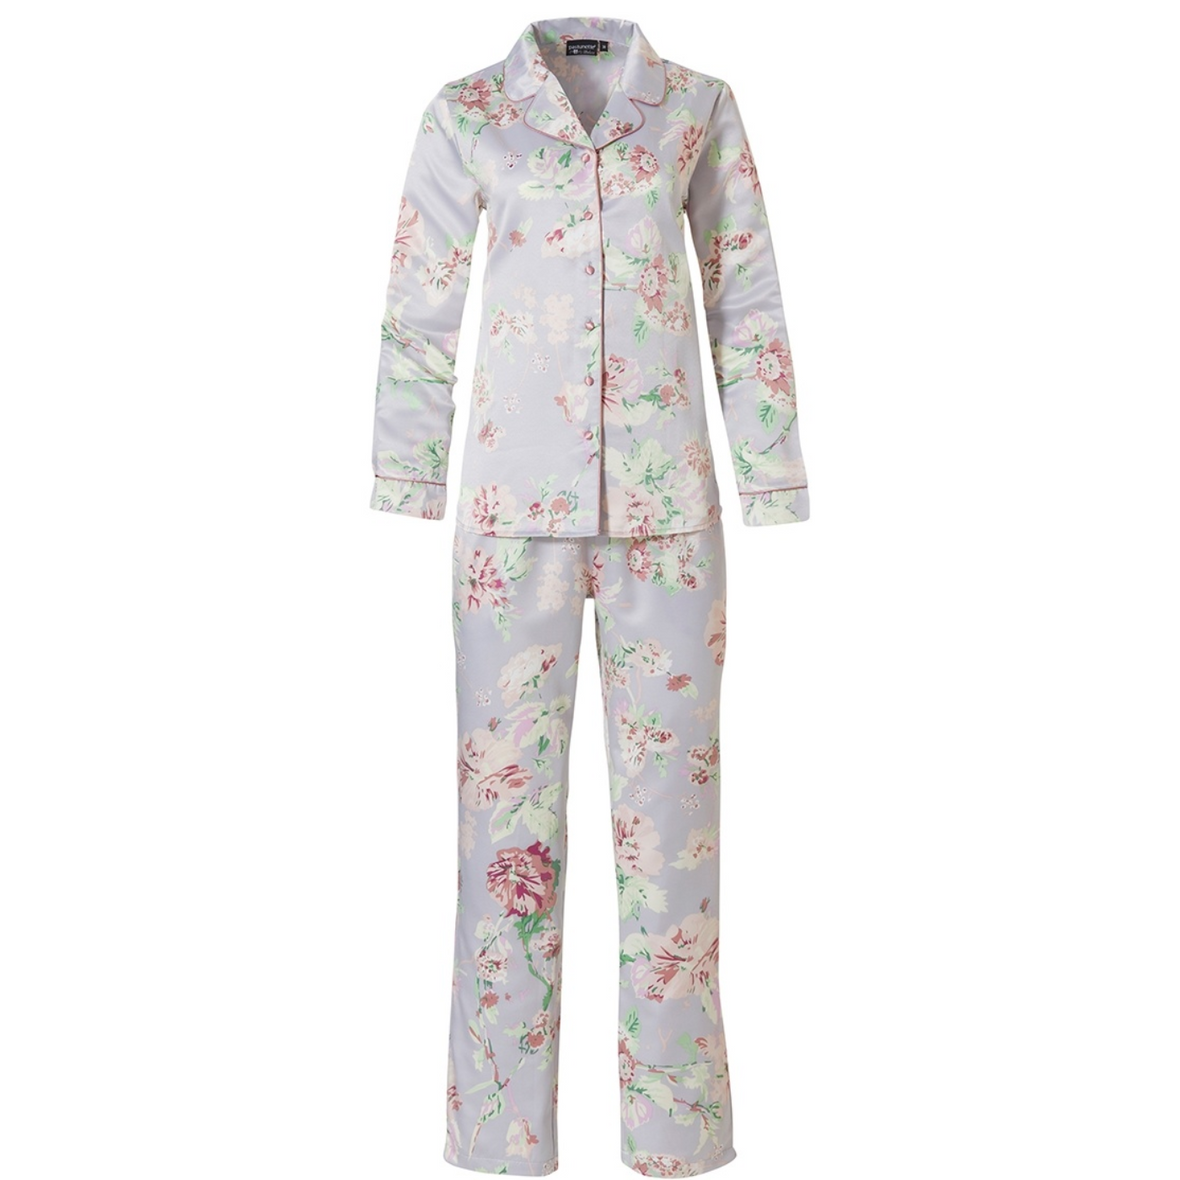 Pastunette Deluxe Pretty Floral Print Pyjamas